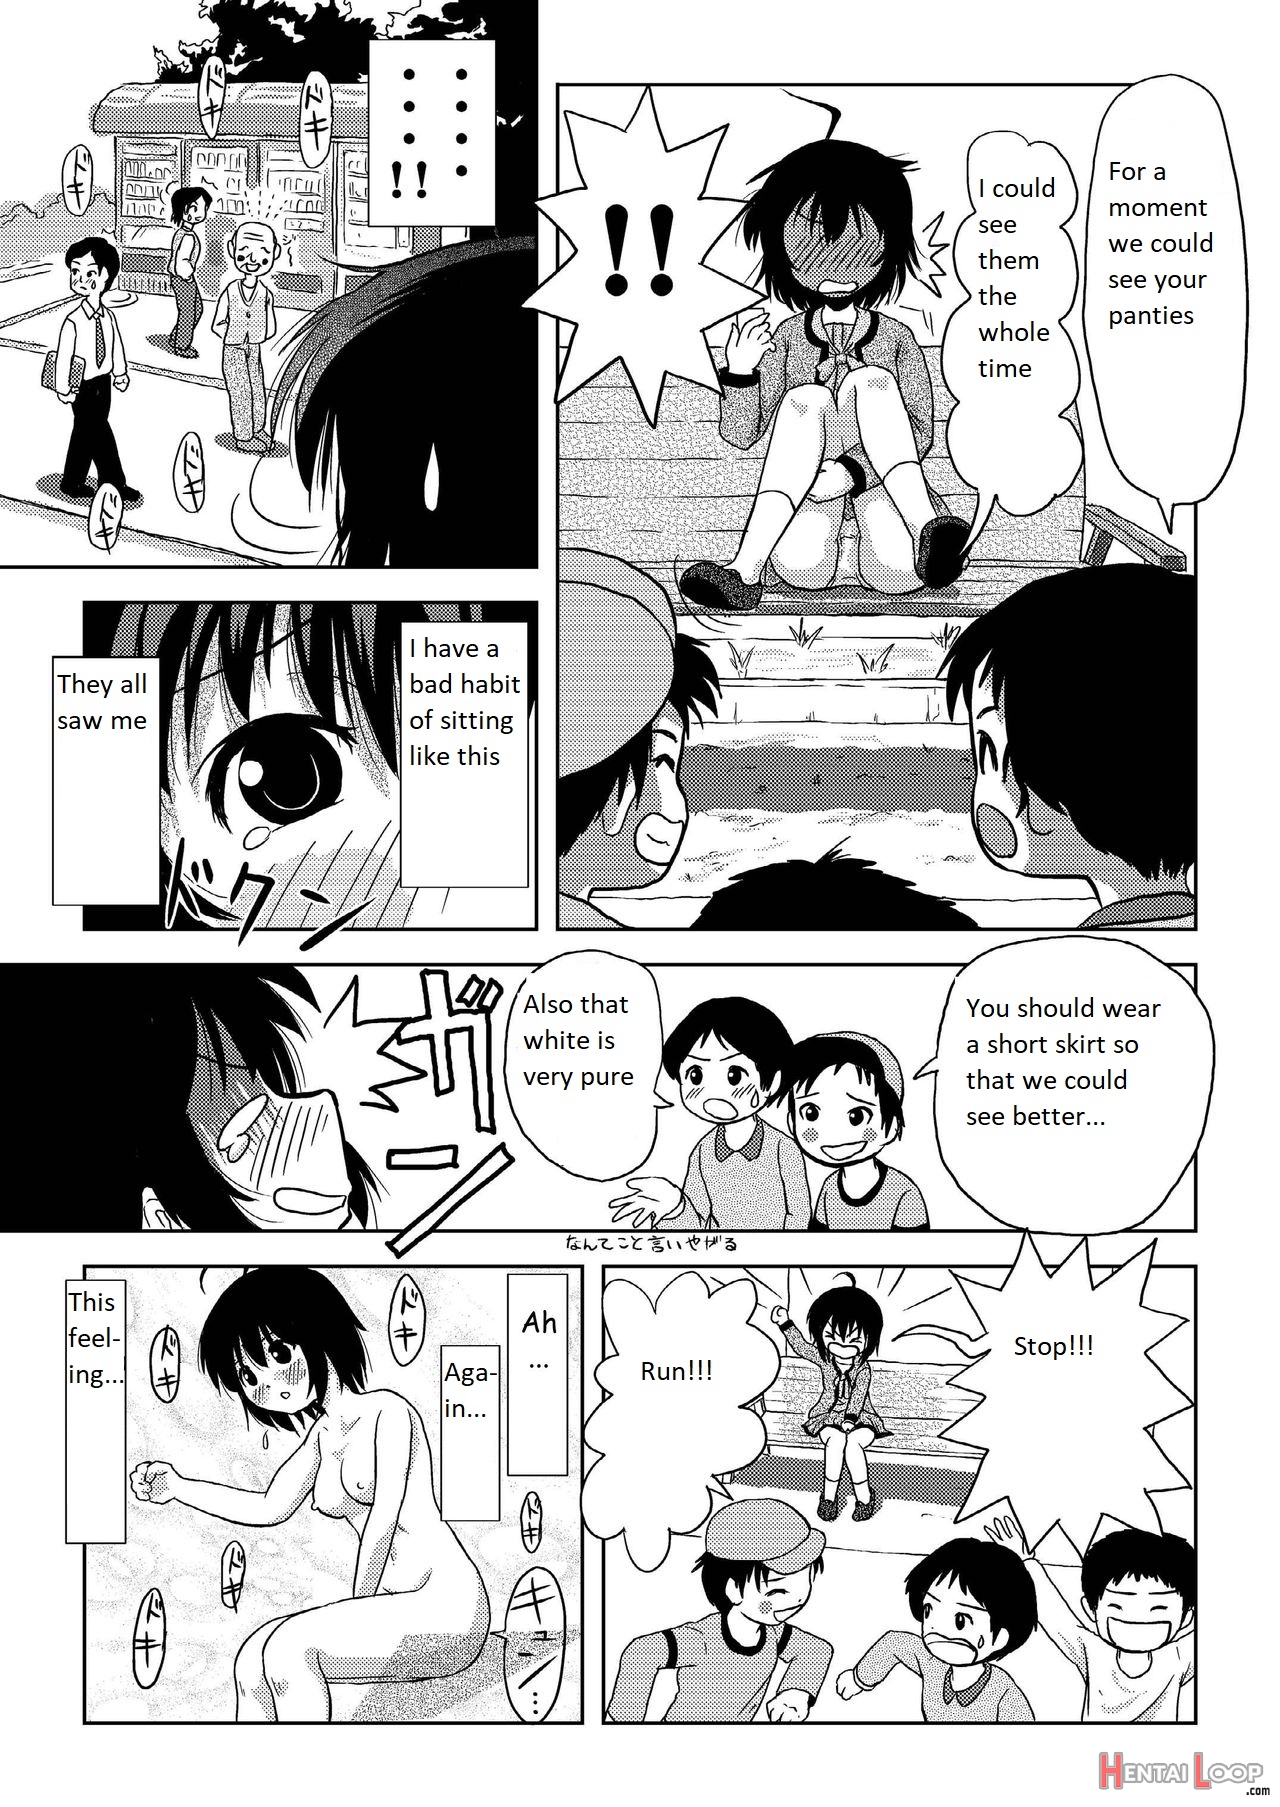 Chiru Exposure 4 Mr T page 9